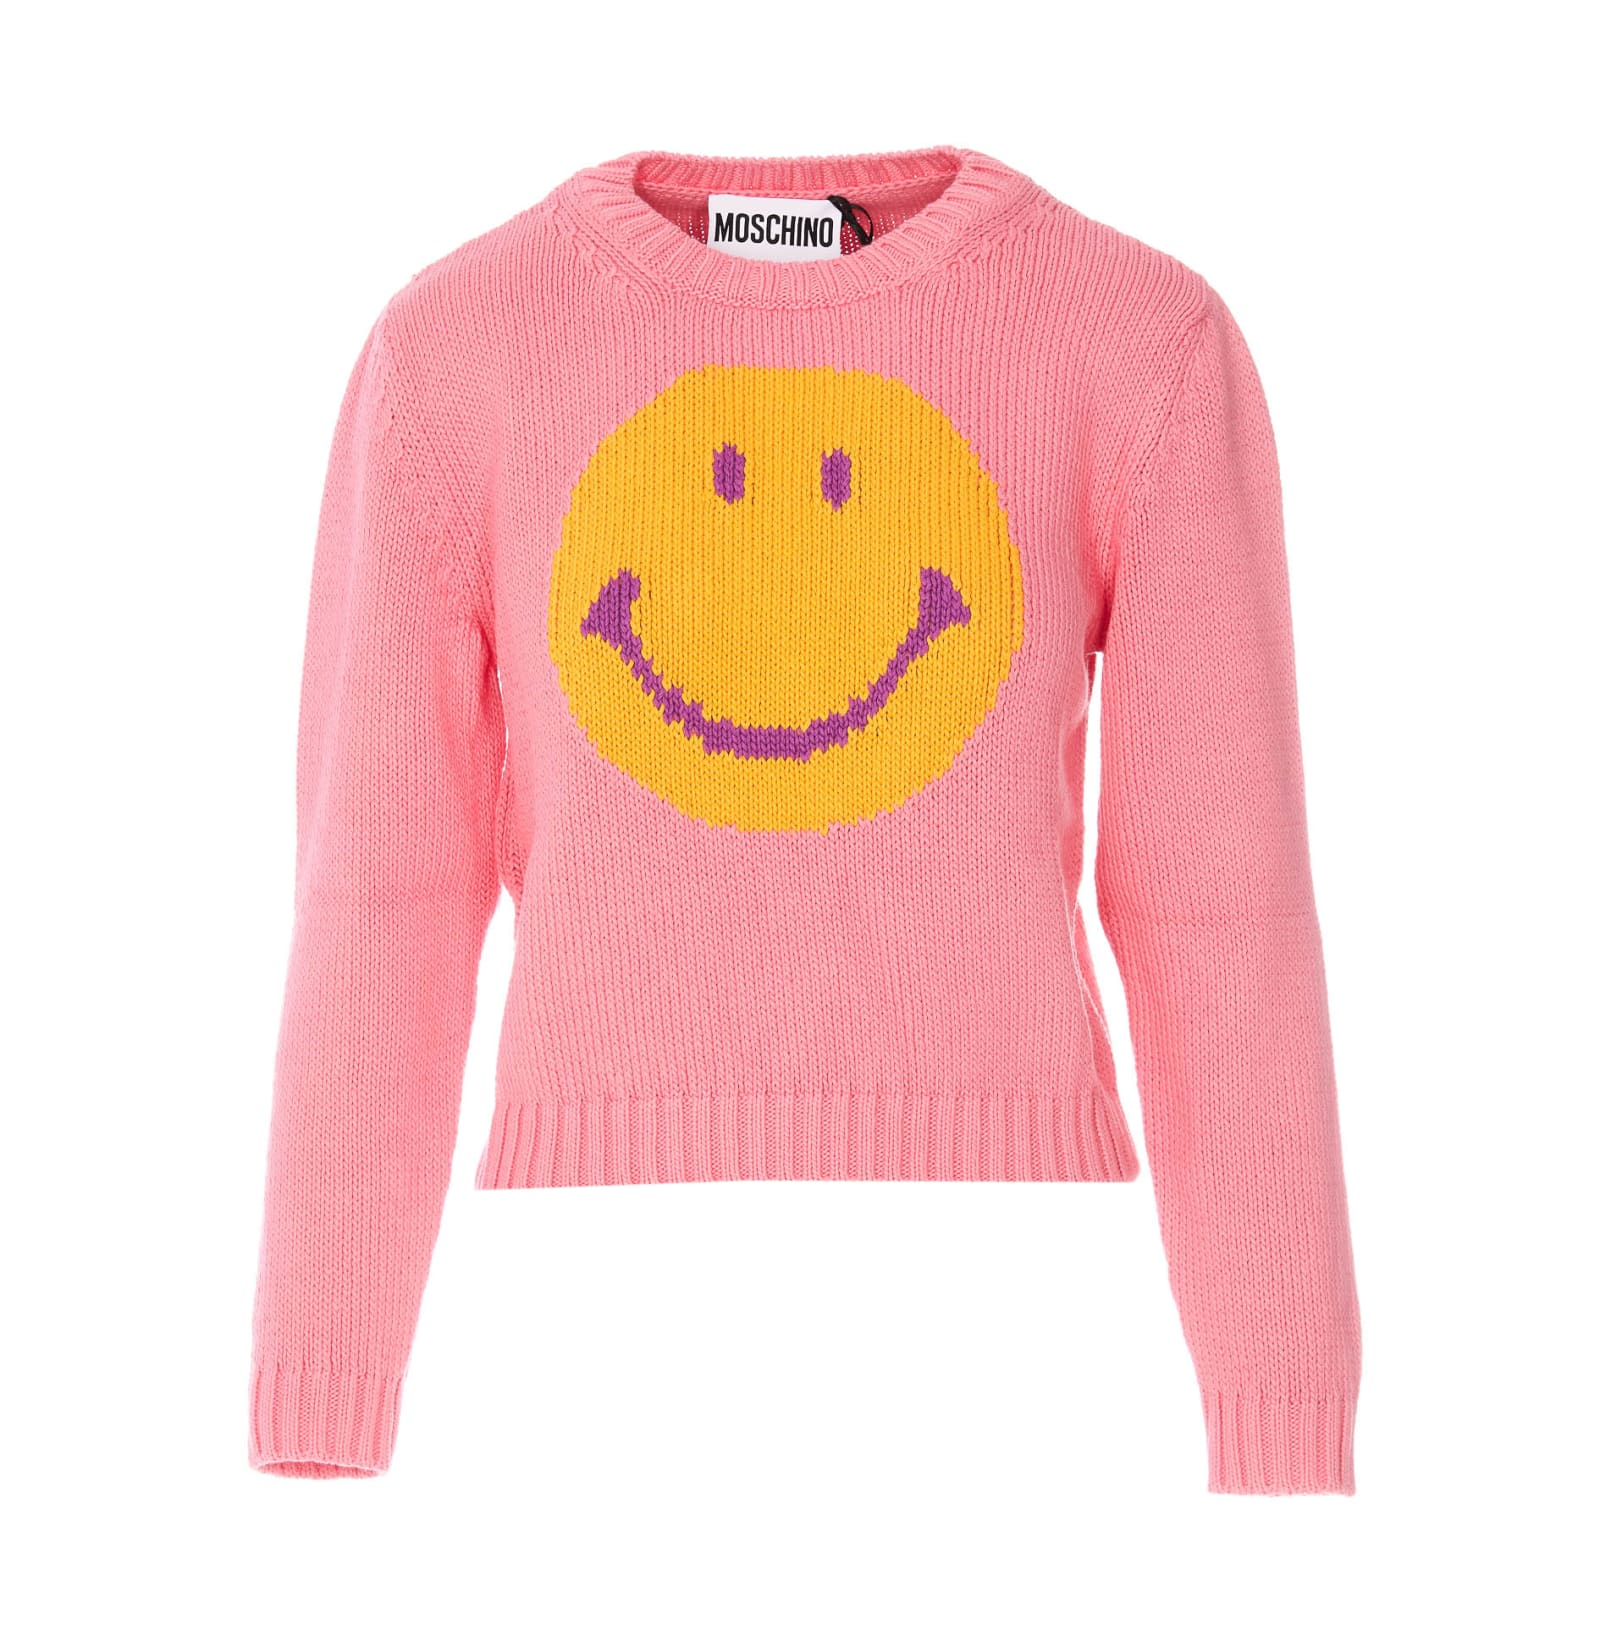 Moschino Smiley Sweater